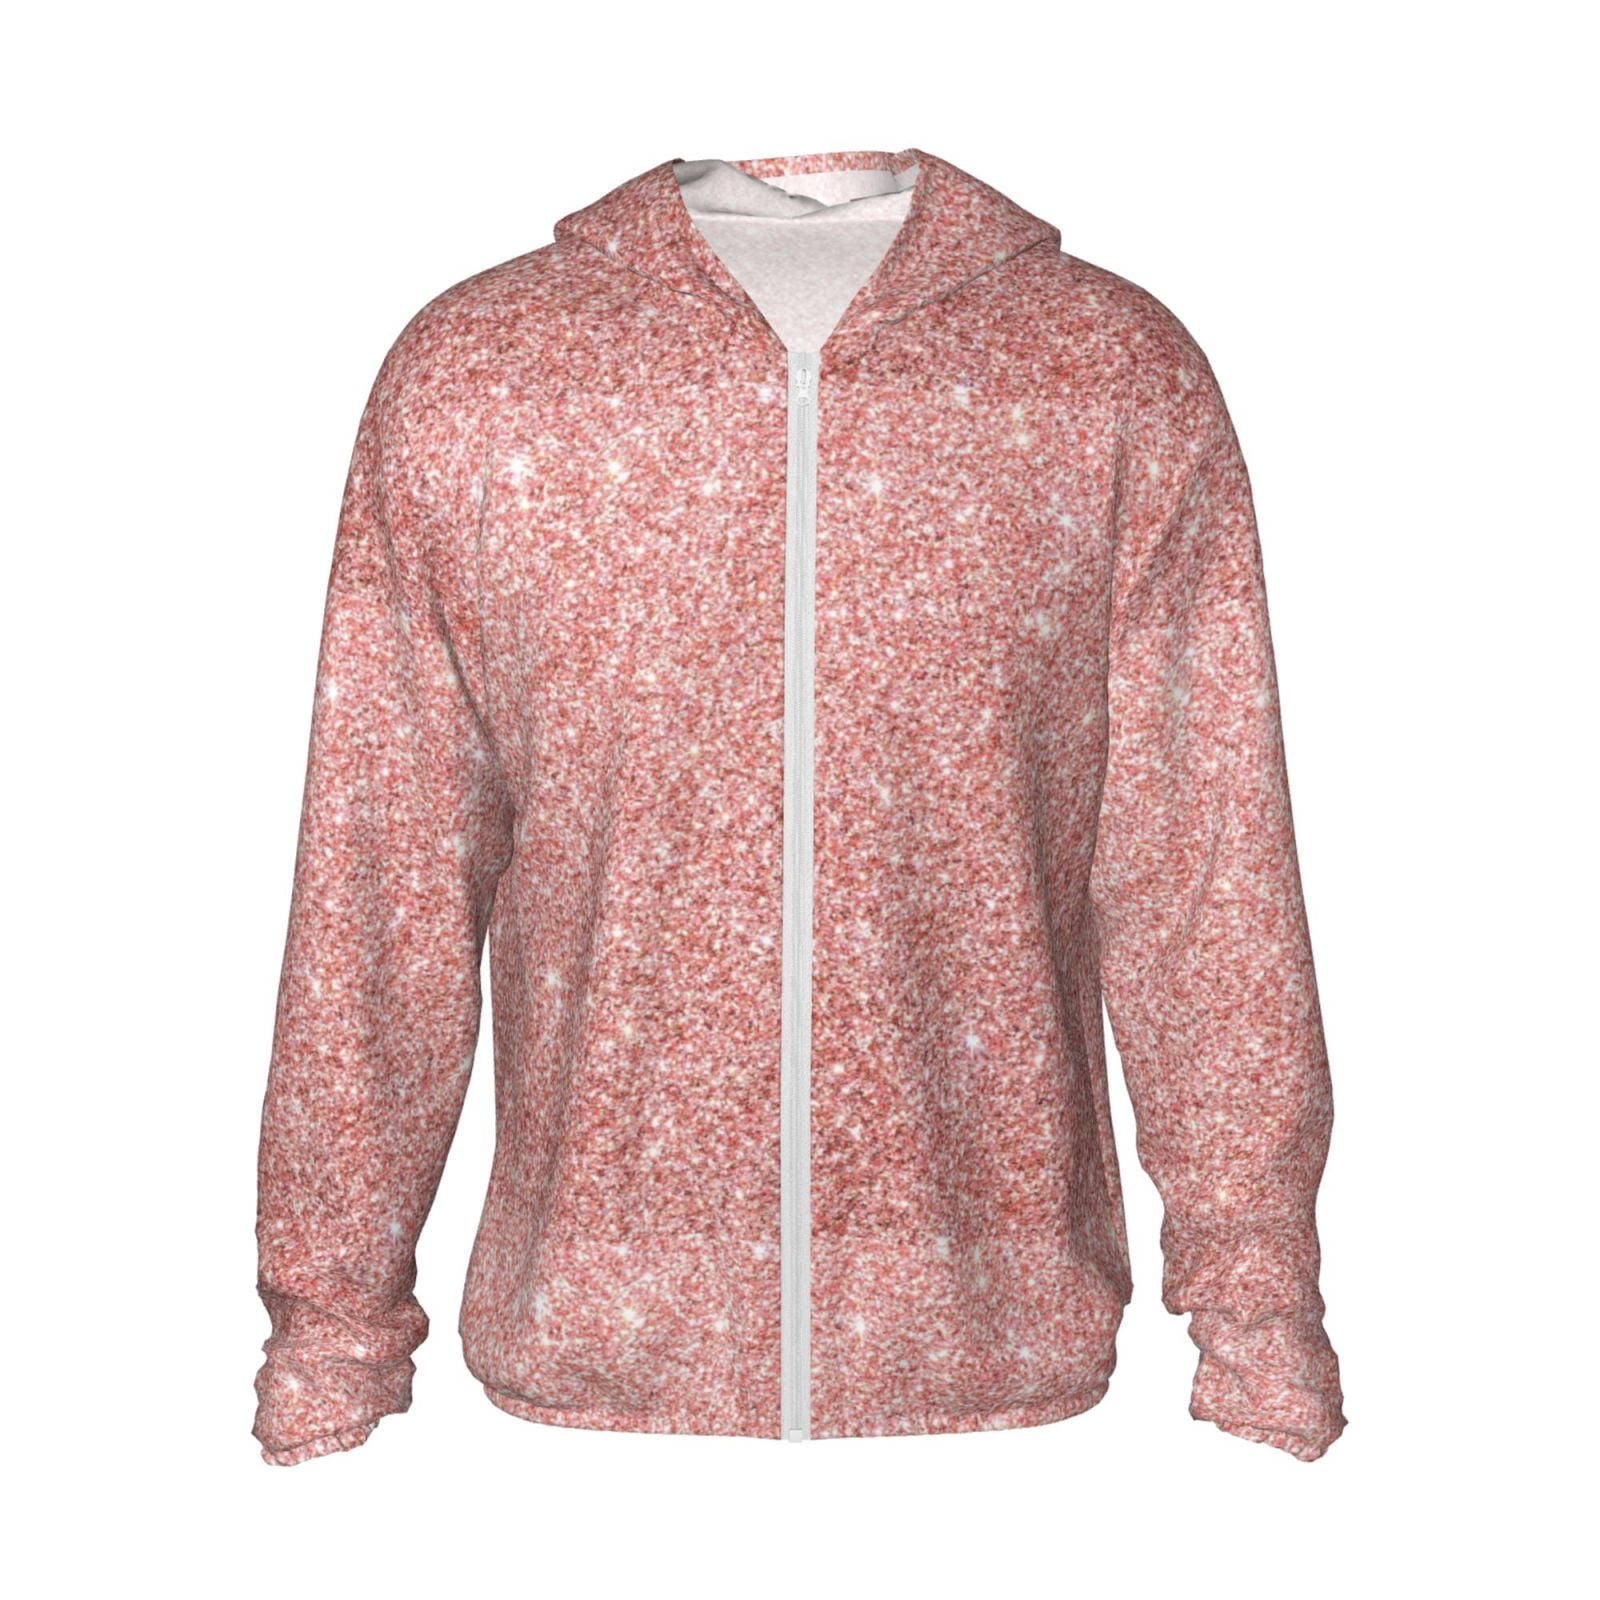 Daiia Rose Gold Pink Glitter UPF 50+ Sun Protection Hoodie Jacket ...